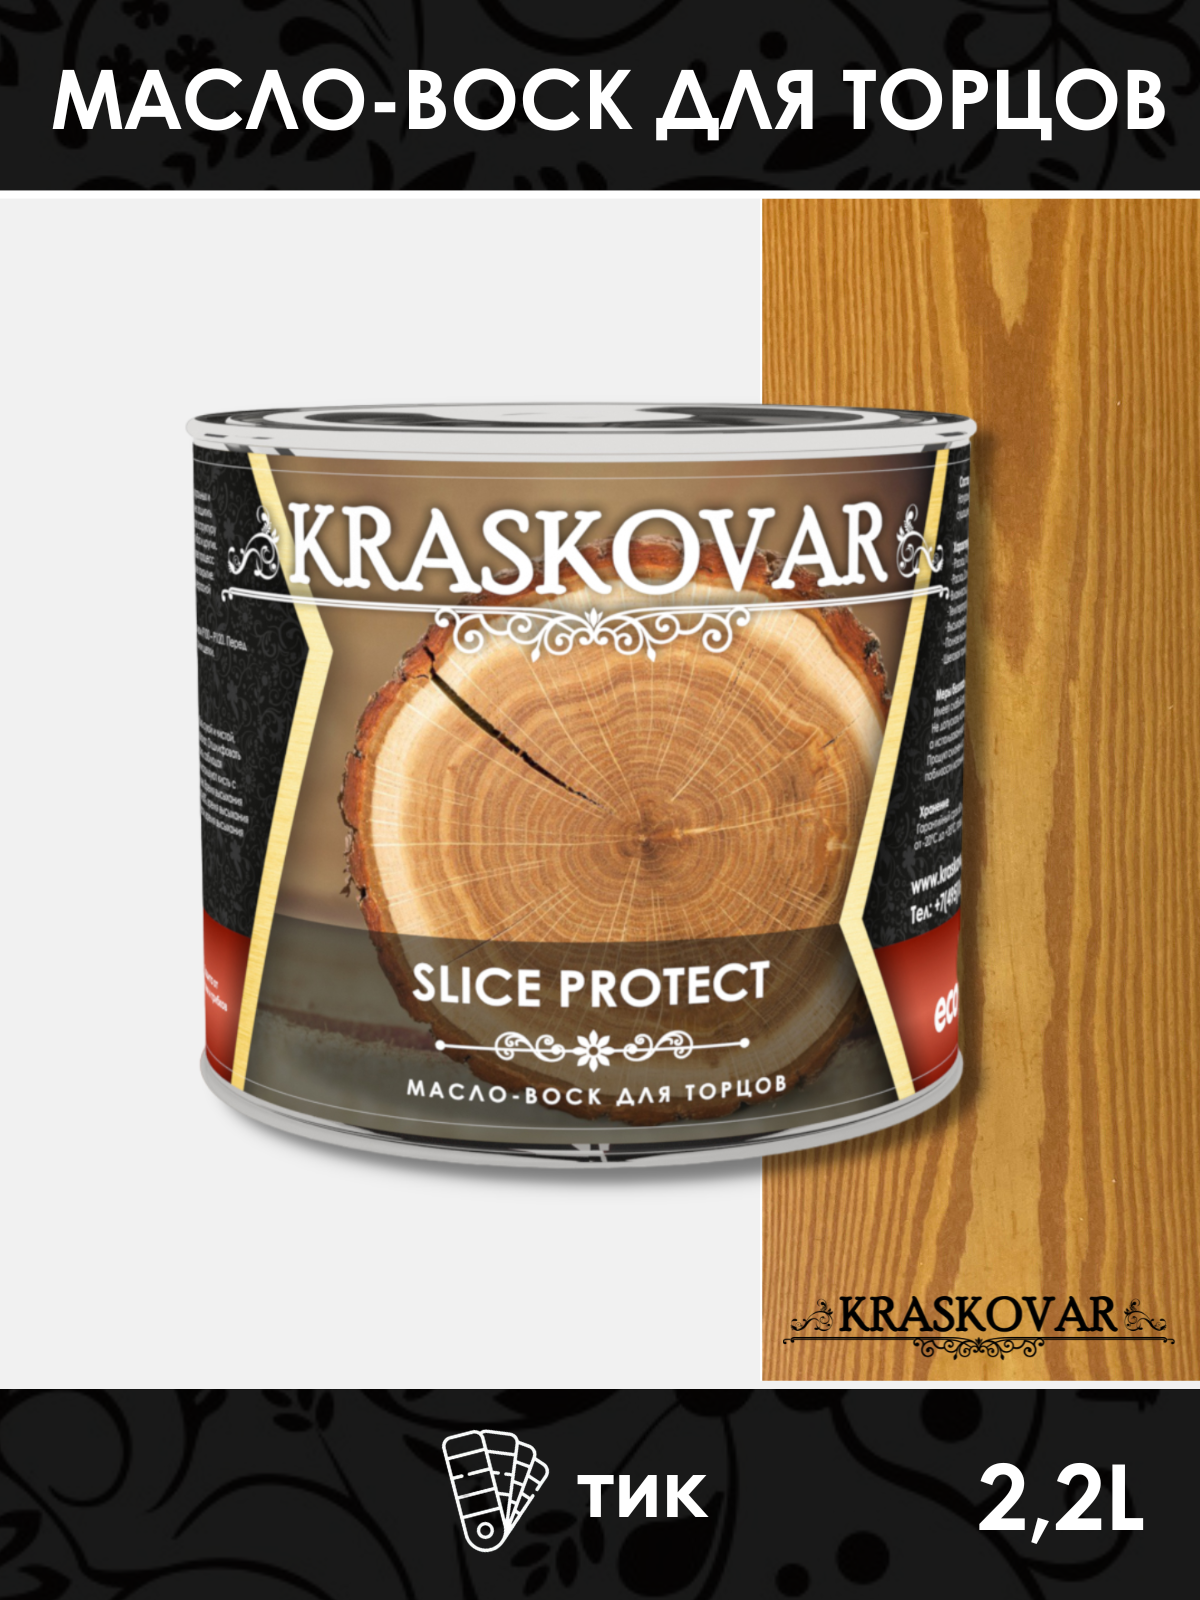 Масло для защиты торцов Kraskovar Slice Protect тик 2,2л